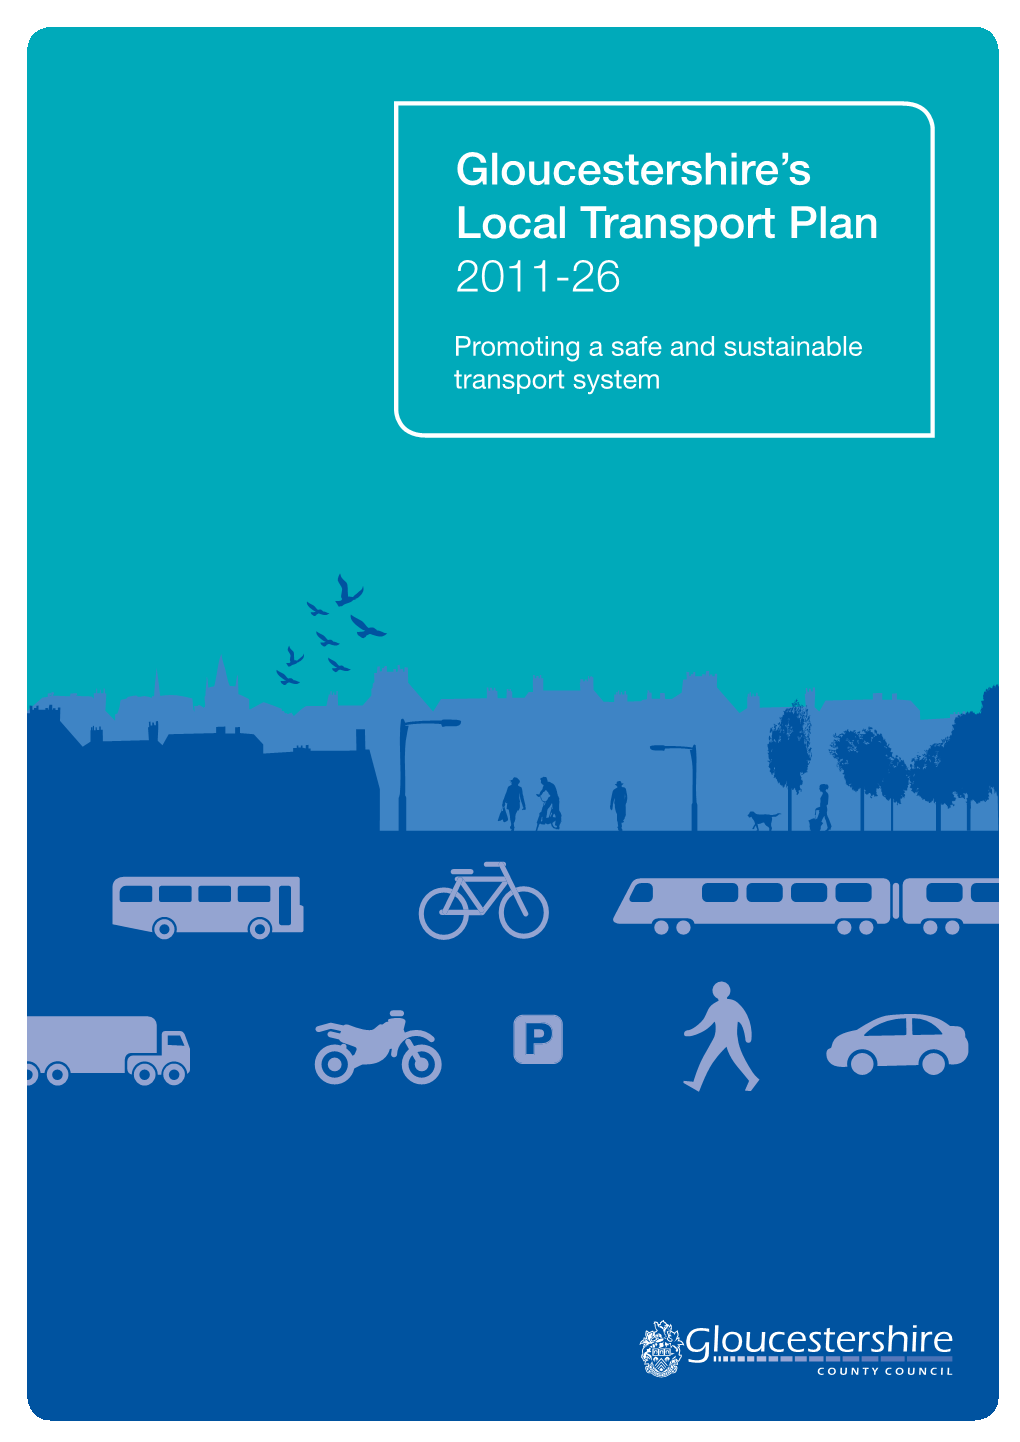 Gloucestershire's Local Transport Plan 2011-26